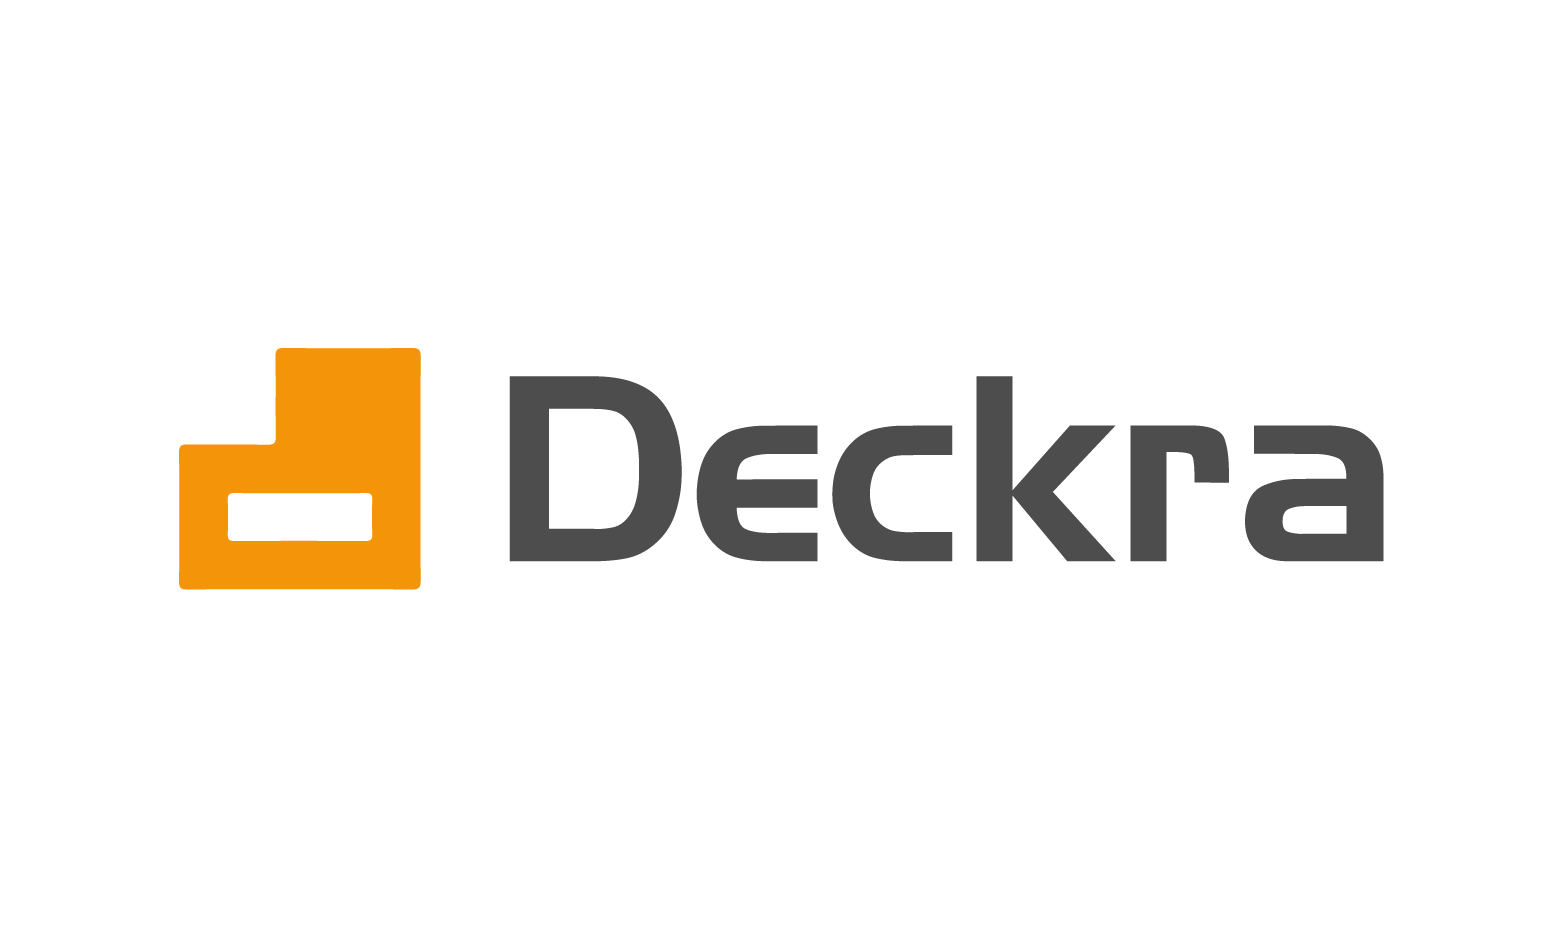 Deckra.com - Creative brandable domain for sale